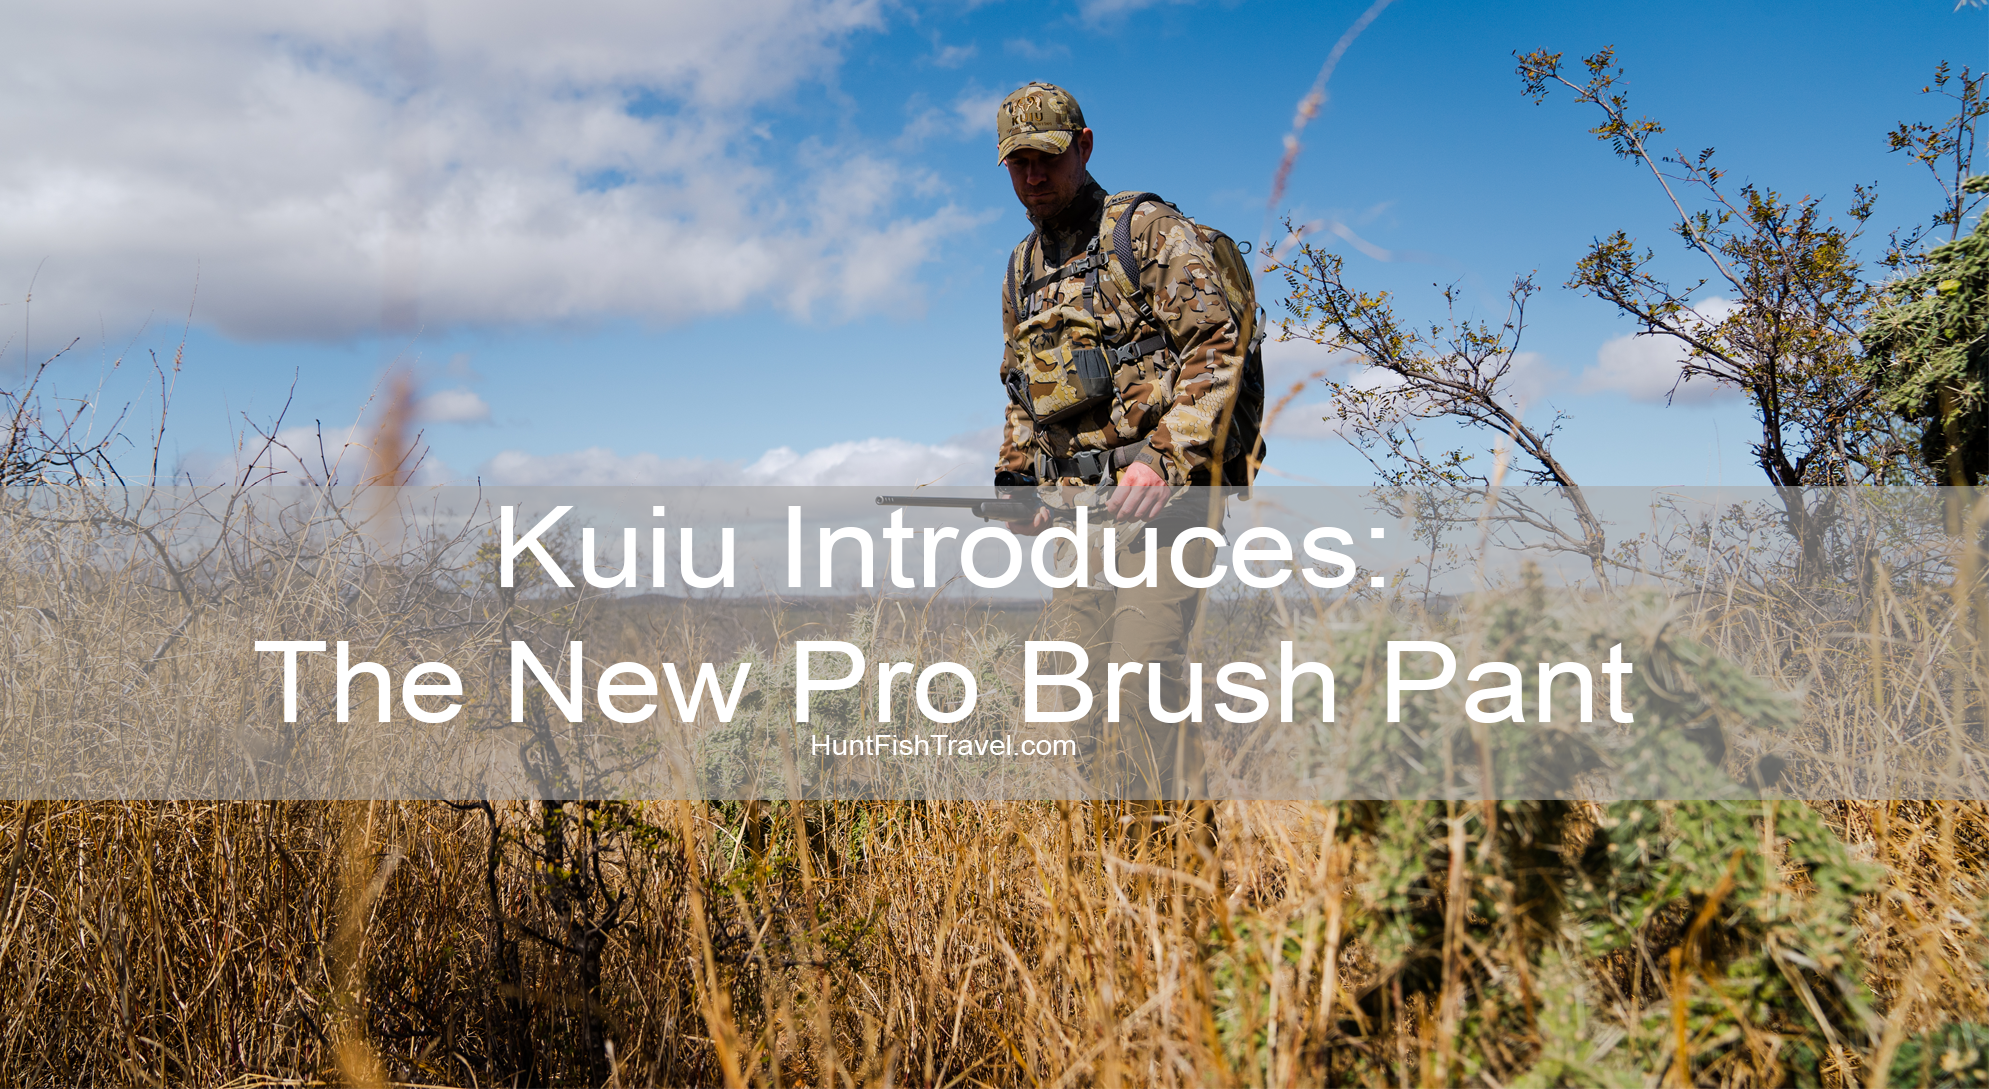 Kuiu Introduces: The New Pro Brush Pant